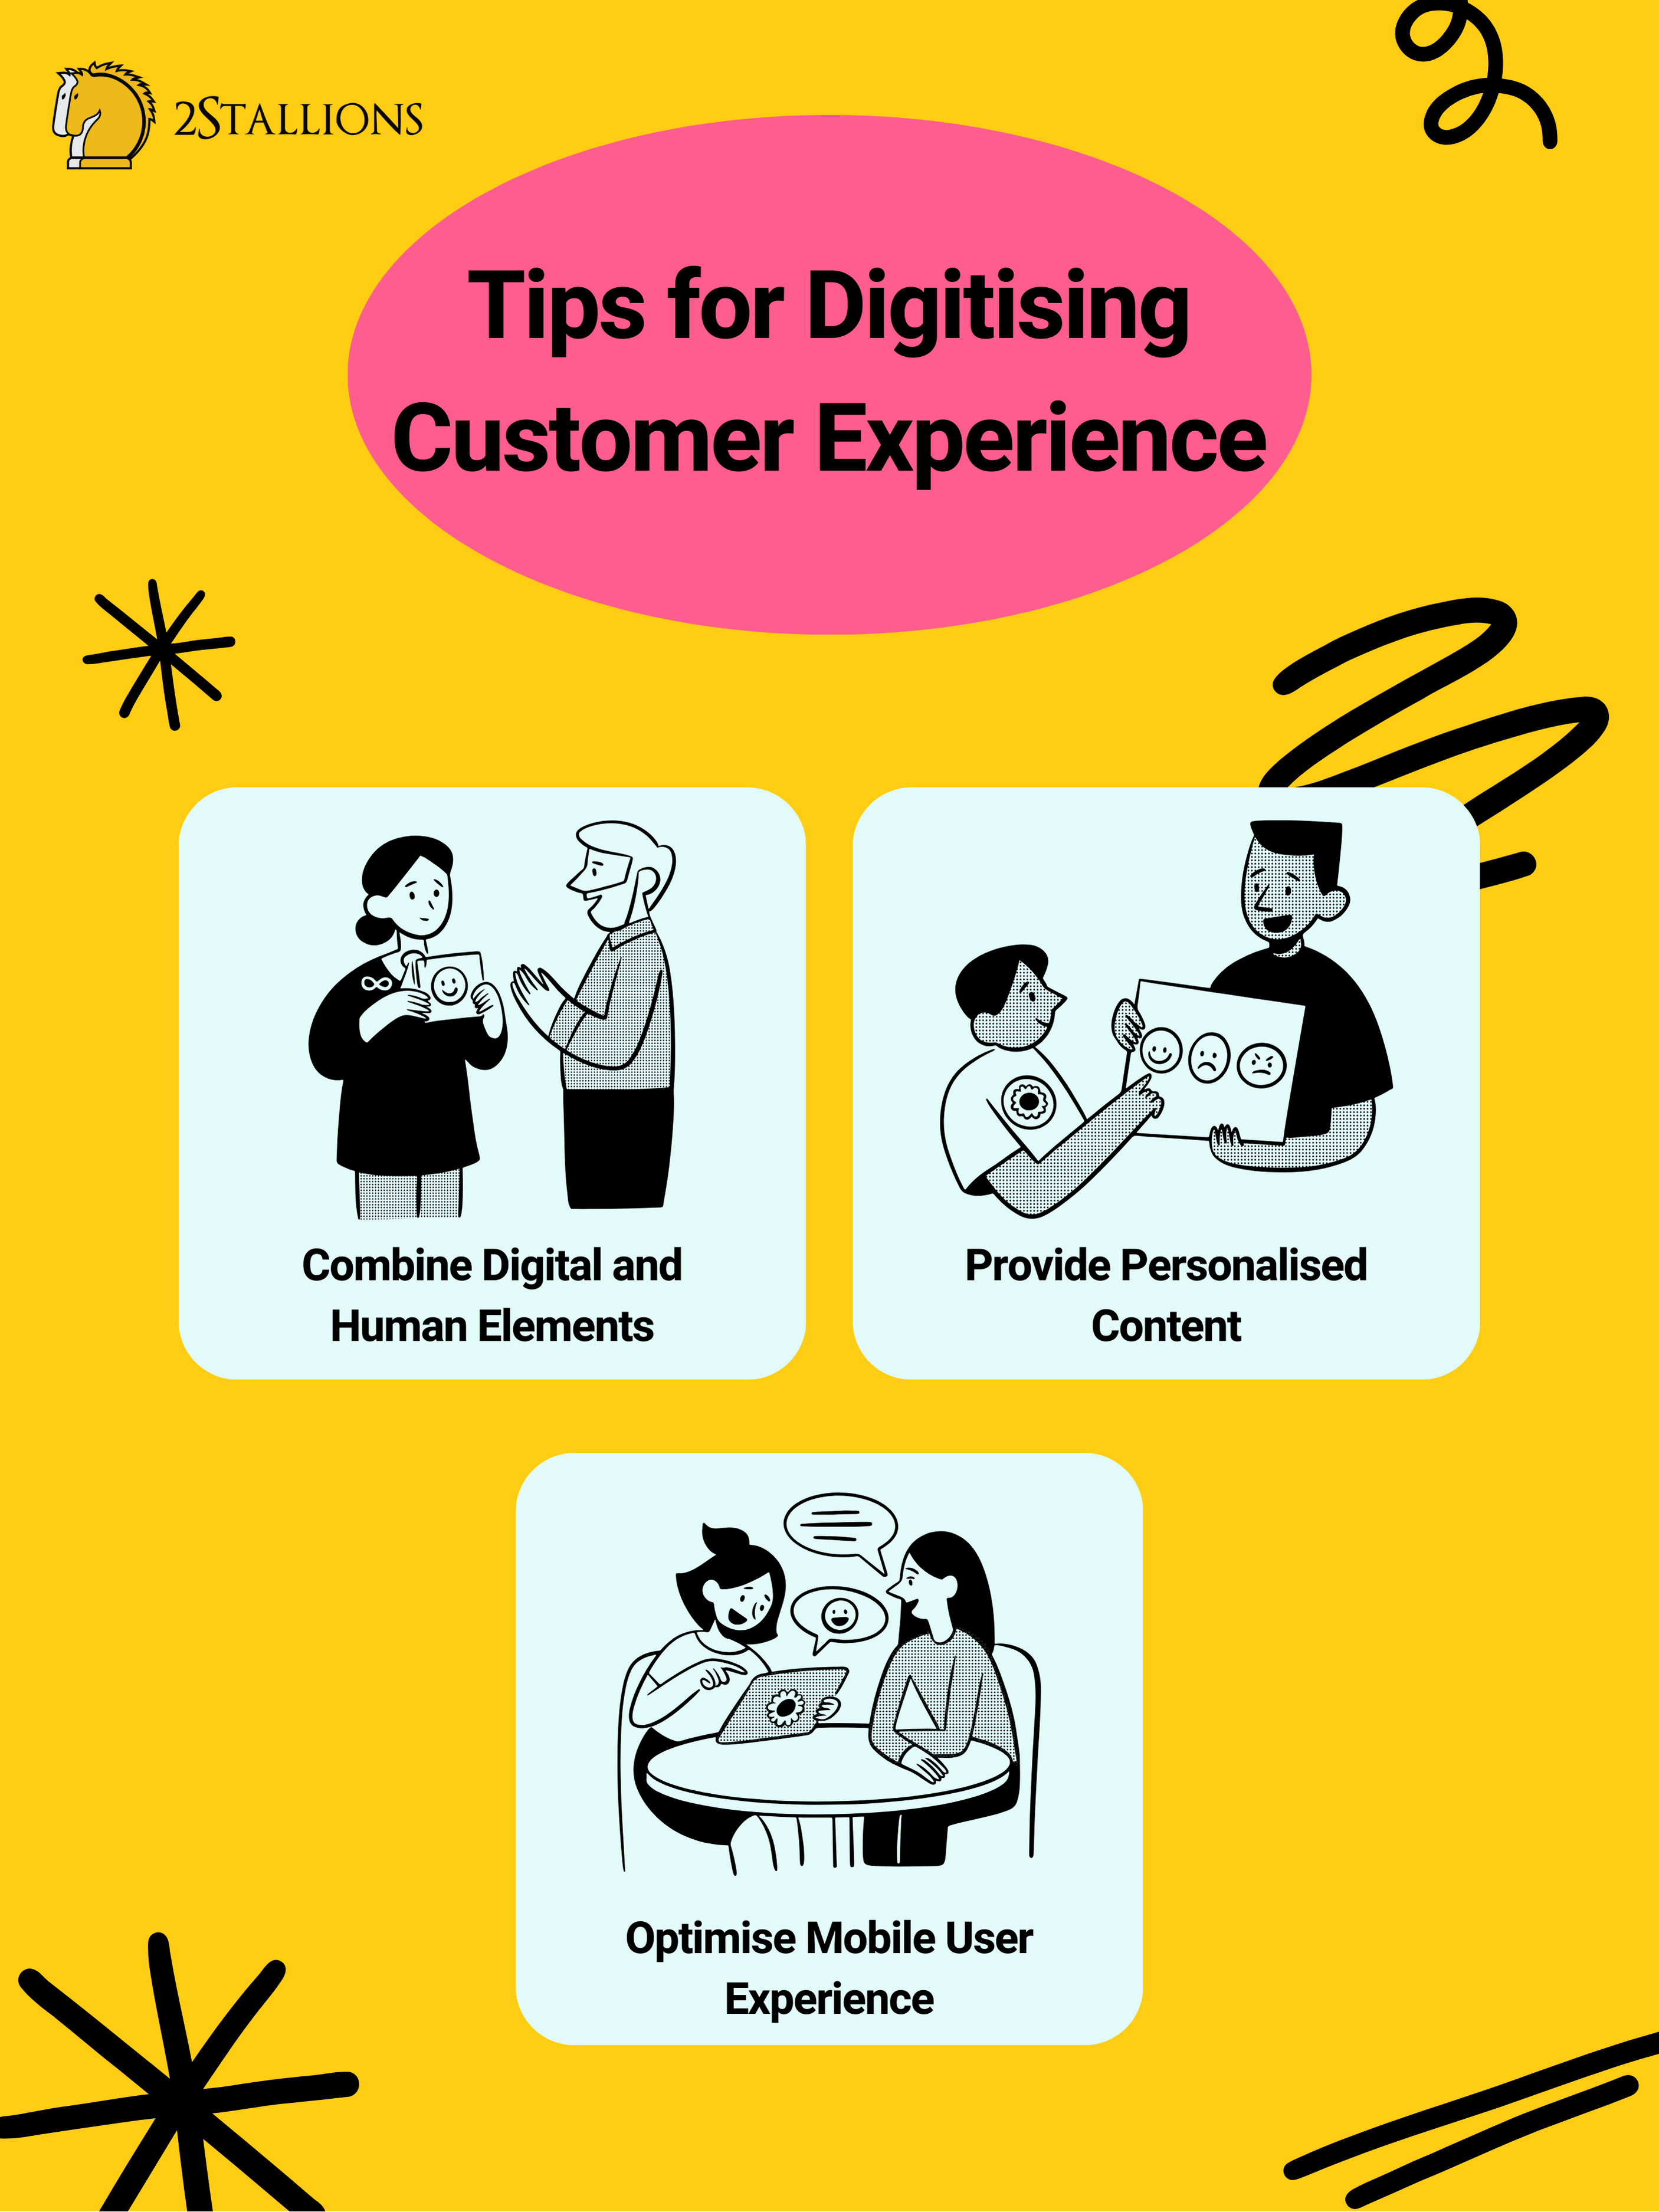 Tips for Digitising Customer Experience | 2Stallions